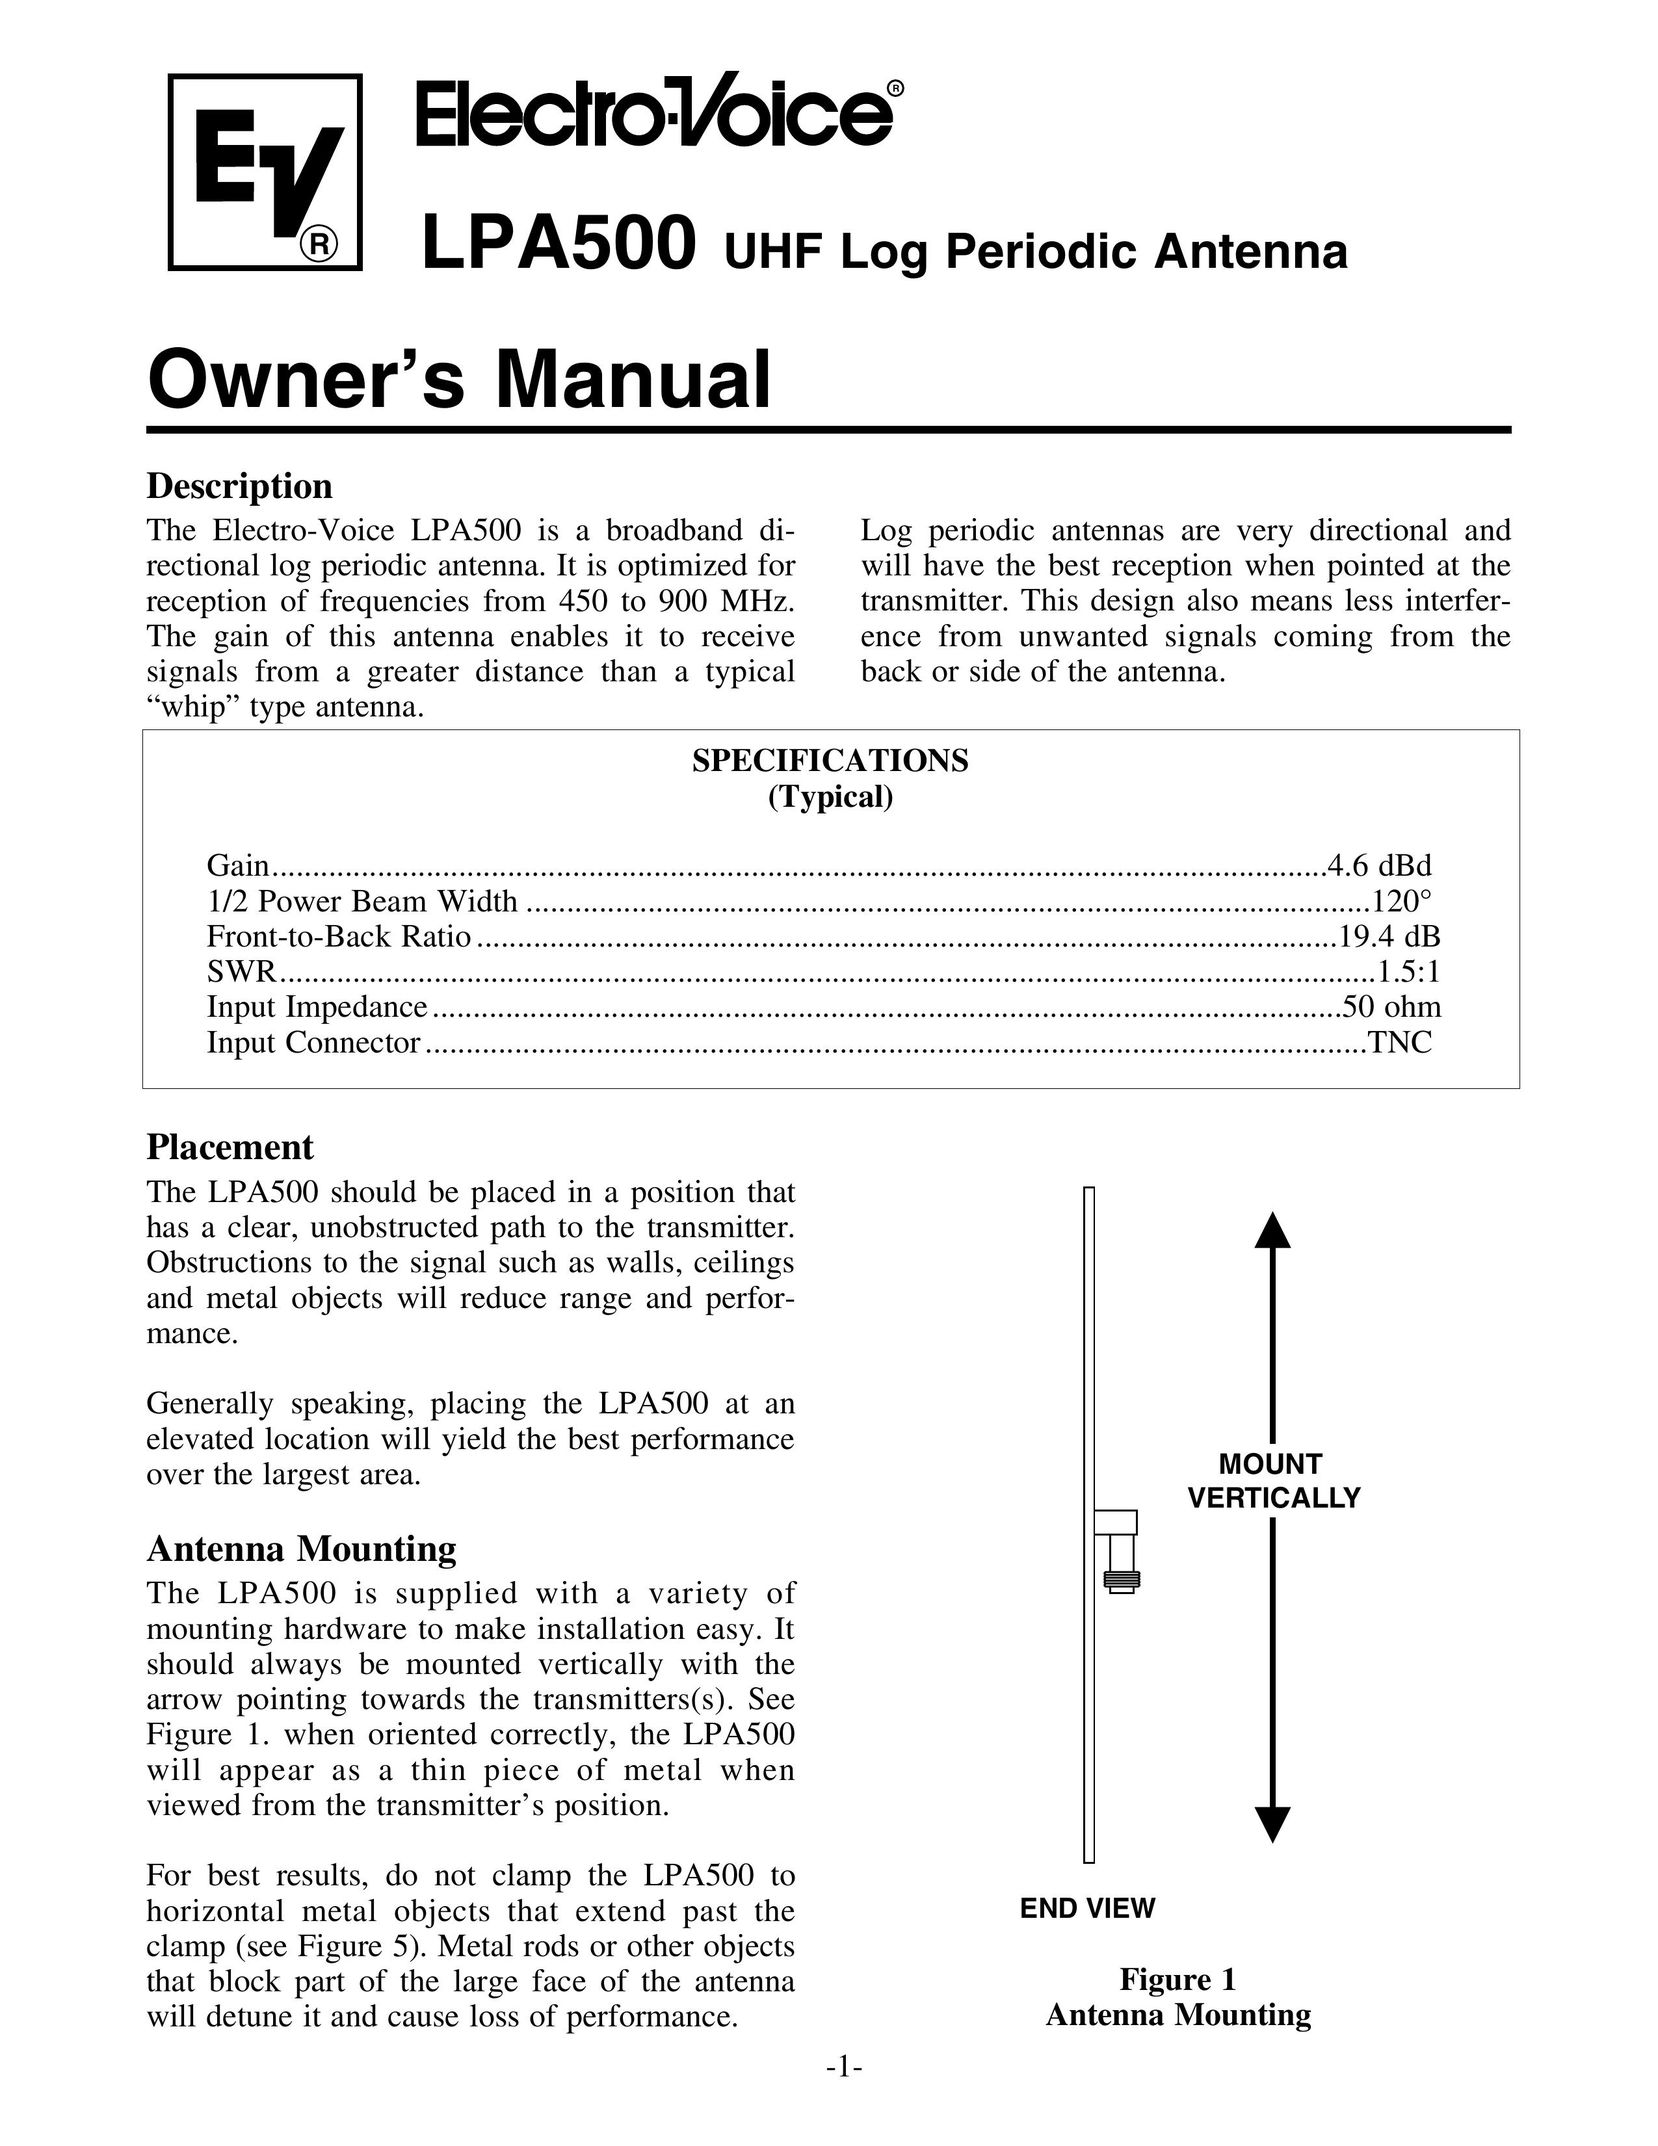 Electro-Voice LPA500 Radio Antenna User Manual